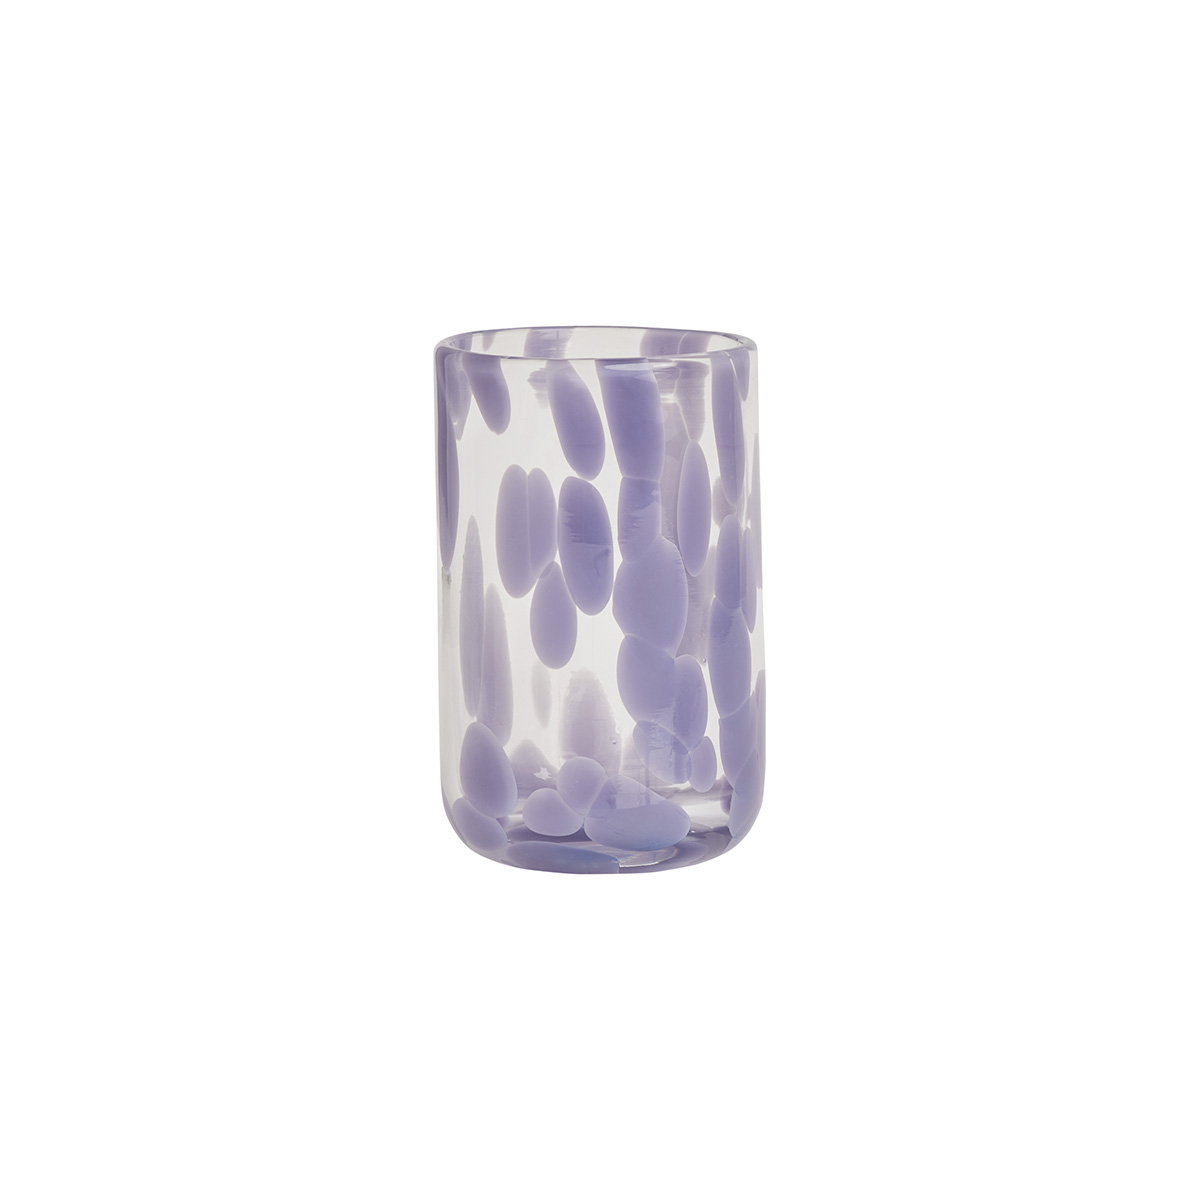 OYOY Living - Jali Glass - Lavender (L300374)